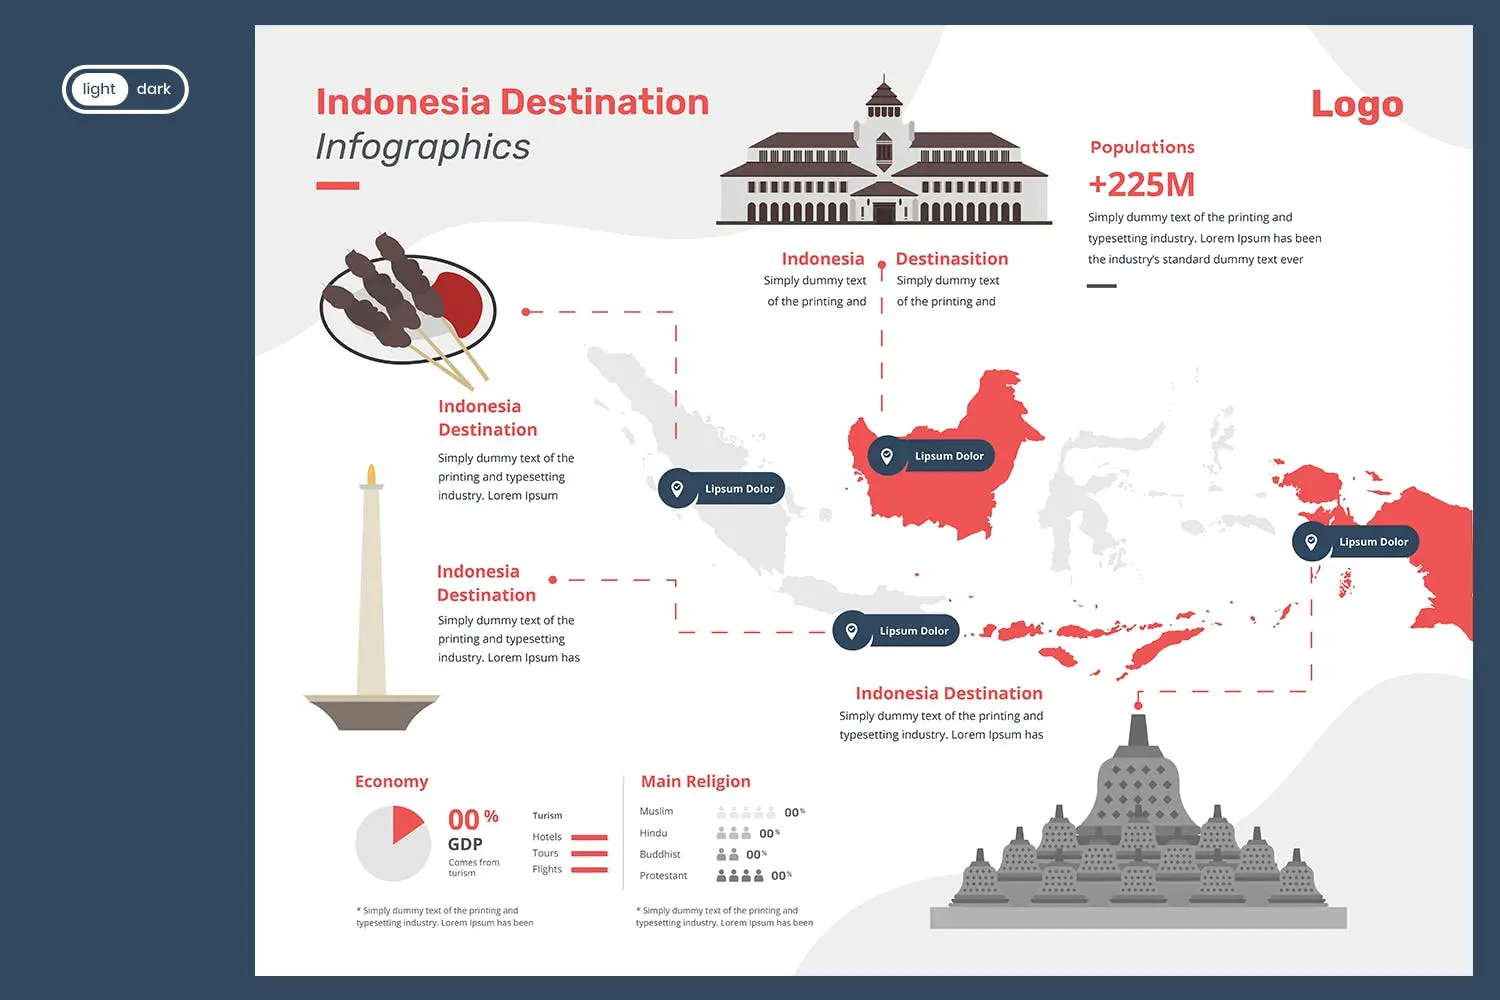 32 印度尼西亚旅游信息图表设计模板 Travel Infographic Indonesia